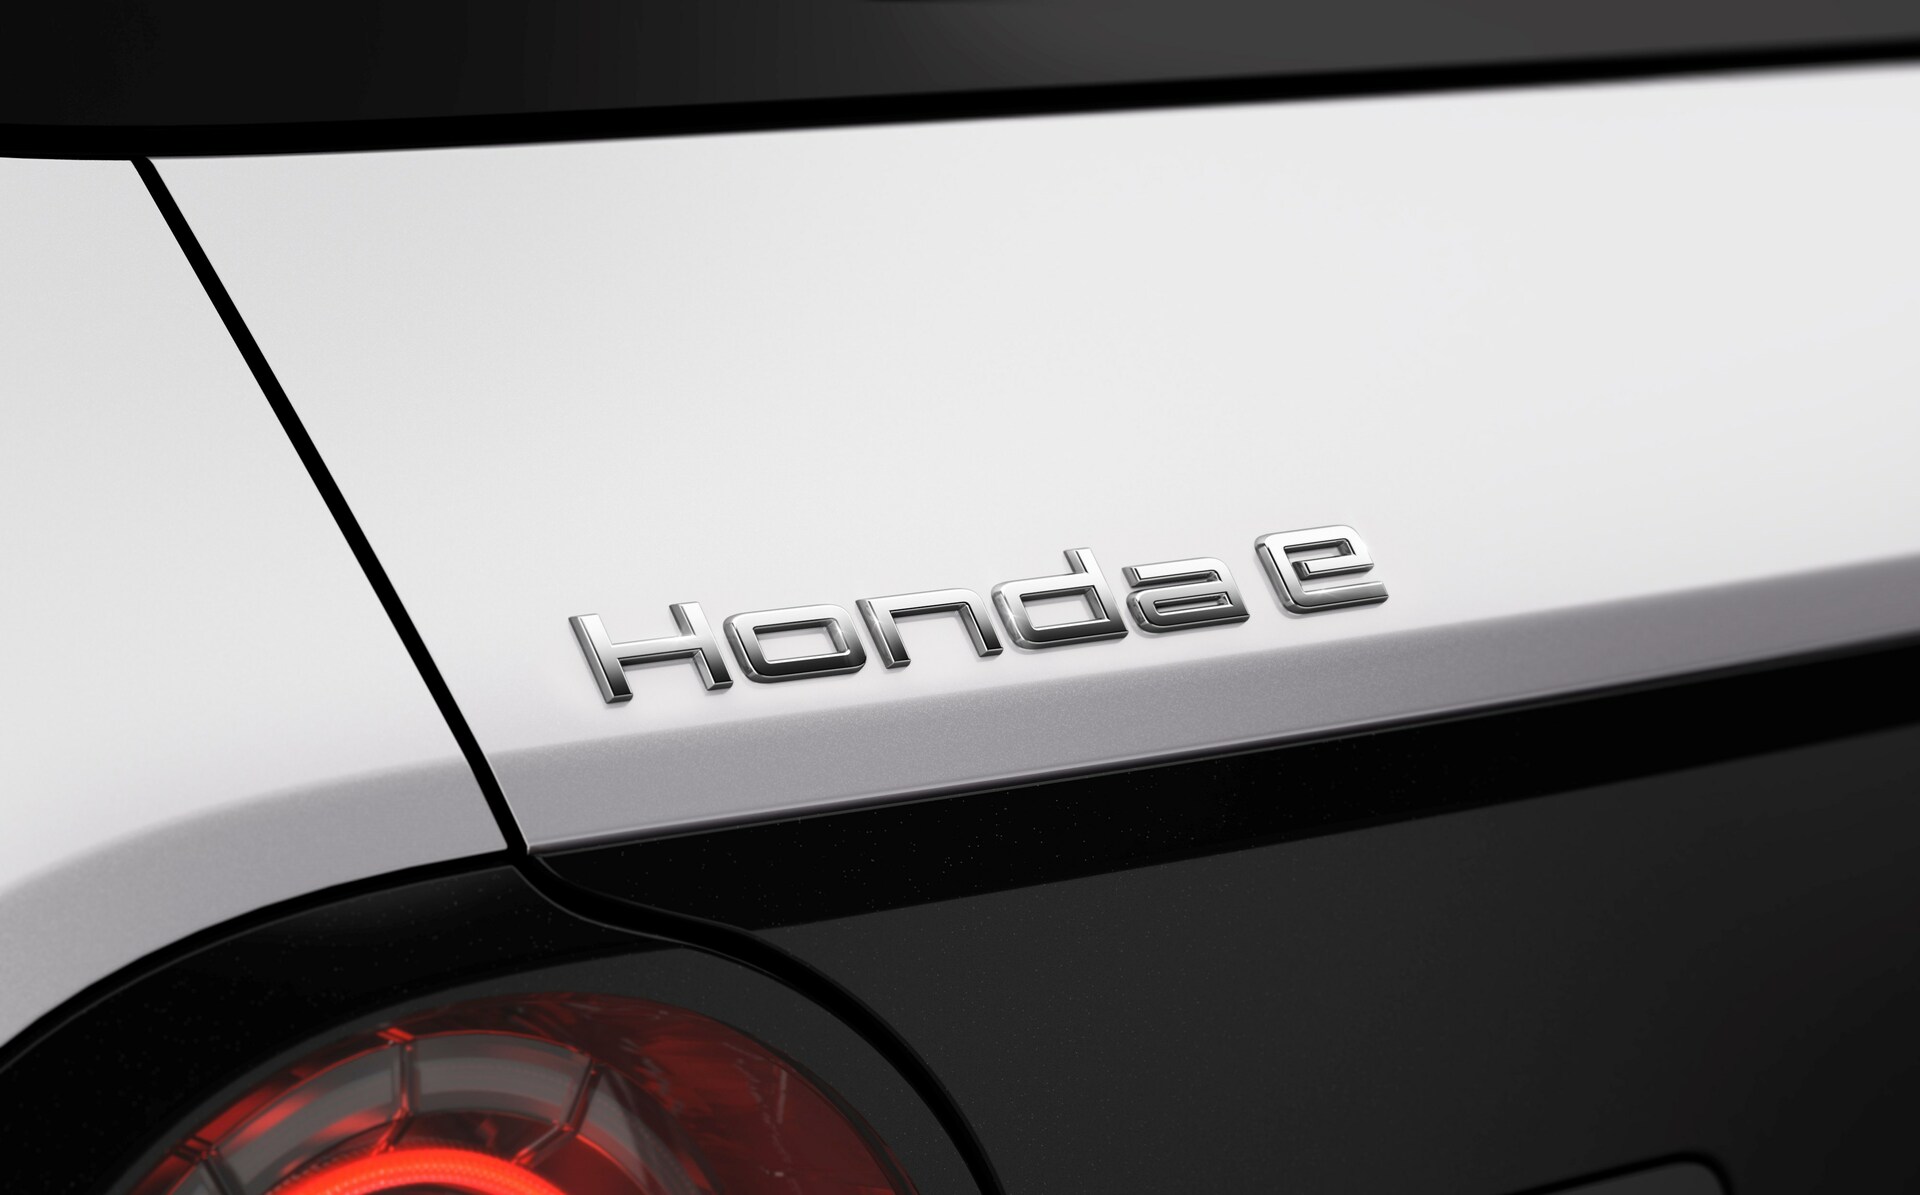 Name Of Honda’s Urban Electric Car Confirmed: ‘honda E’